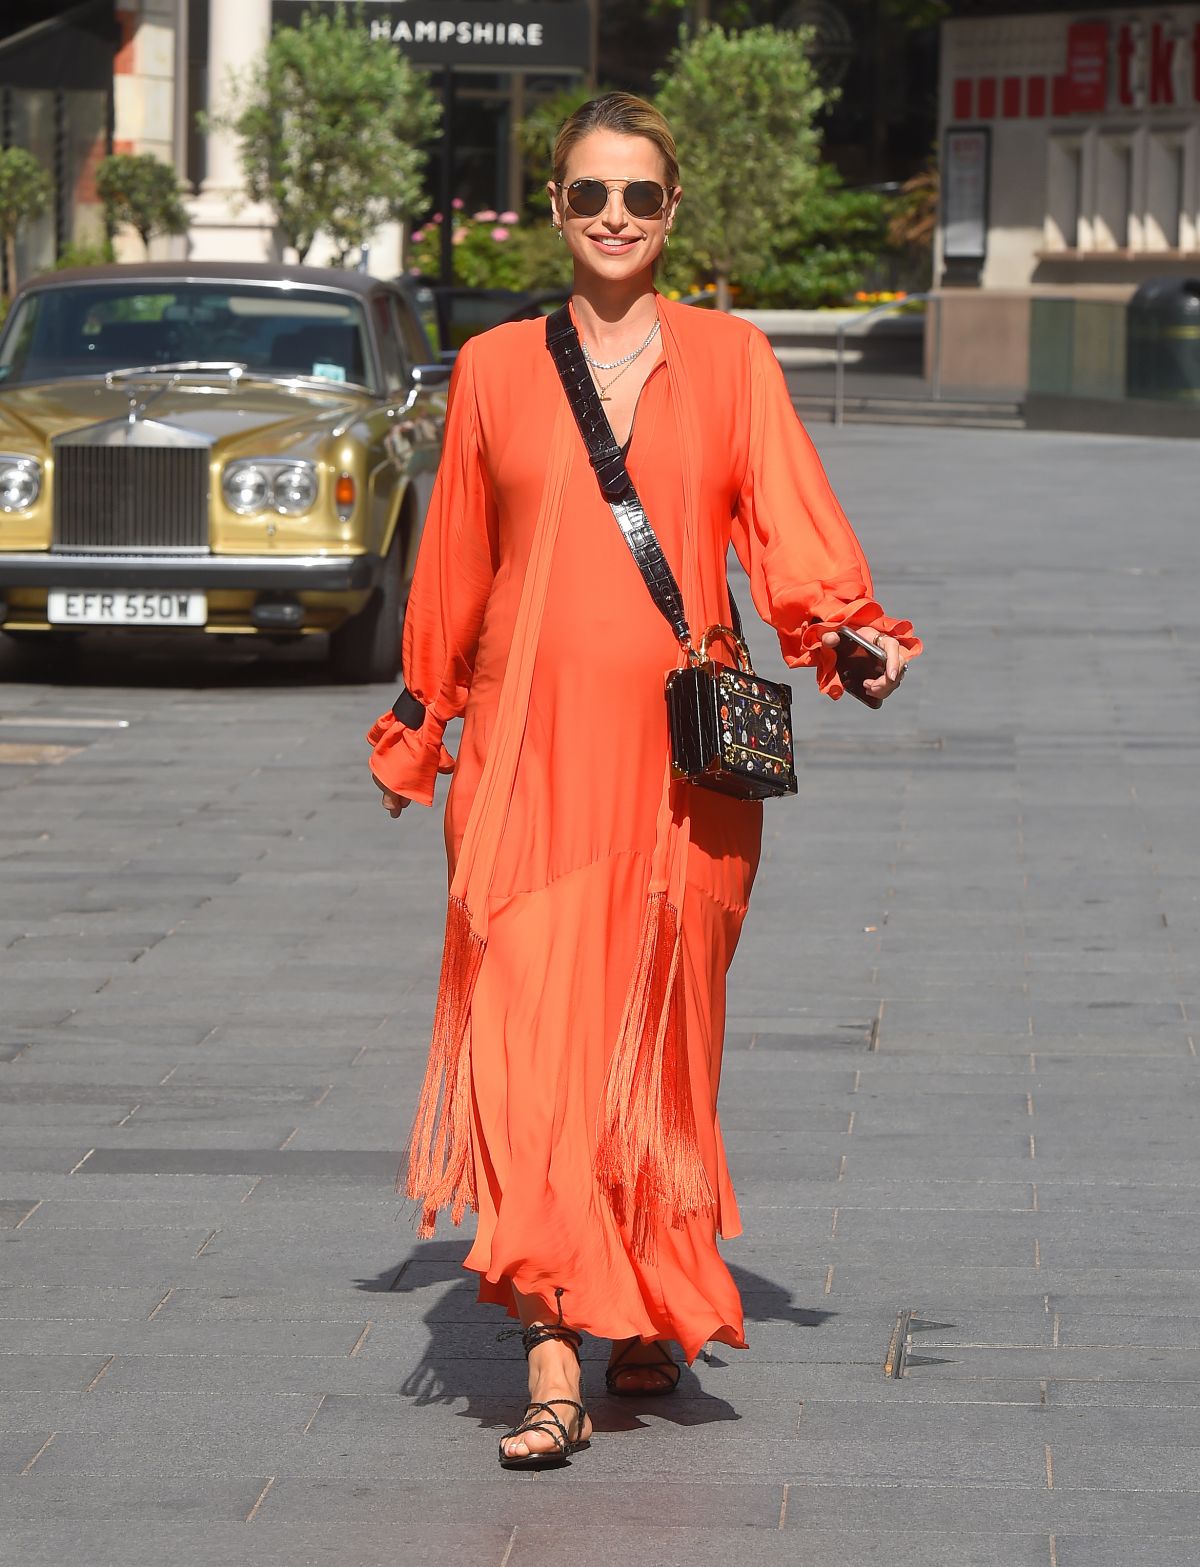 Vogue Williams in a Orange Dress Leaves Global Radio in London 2020/06/07